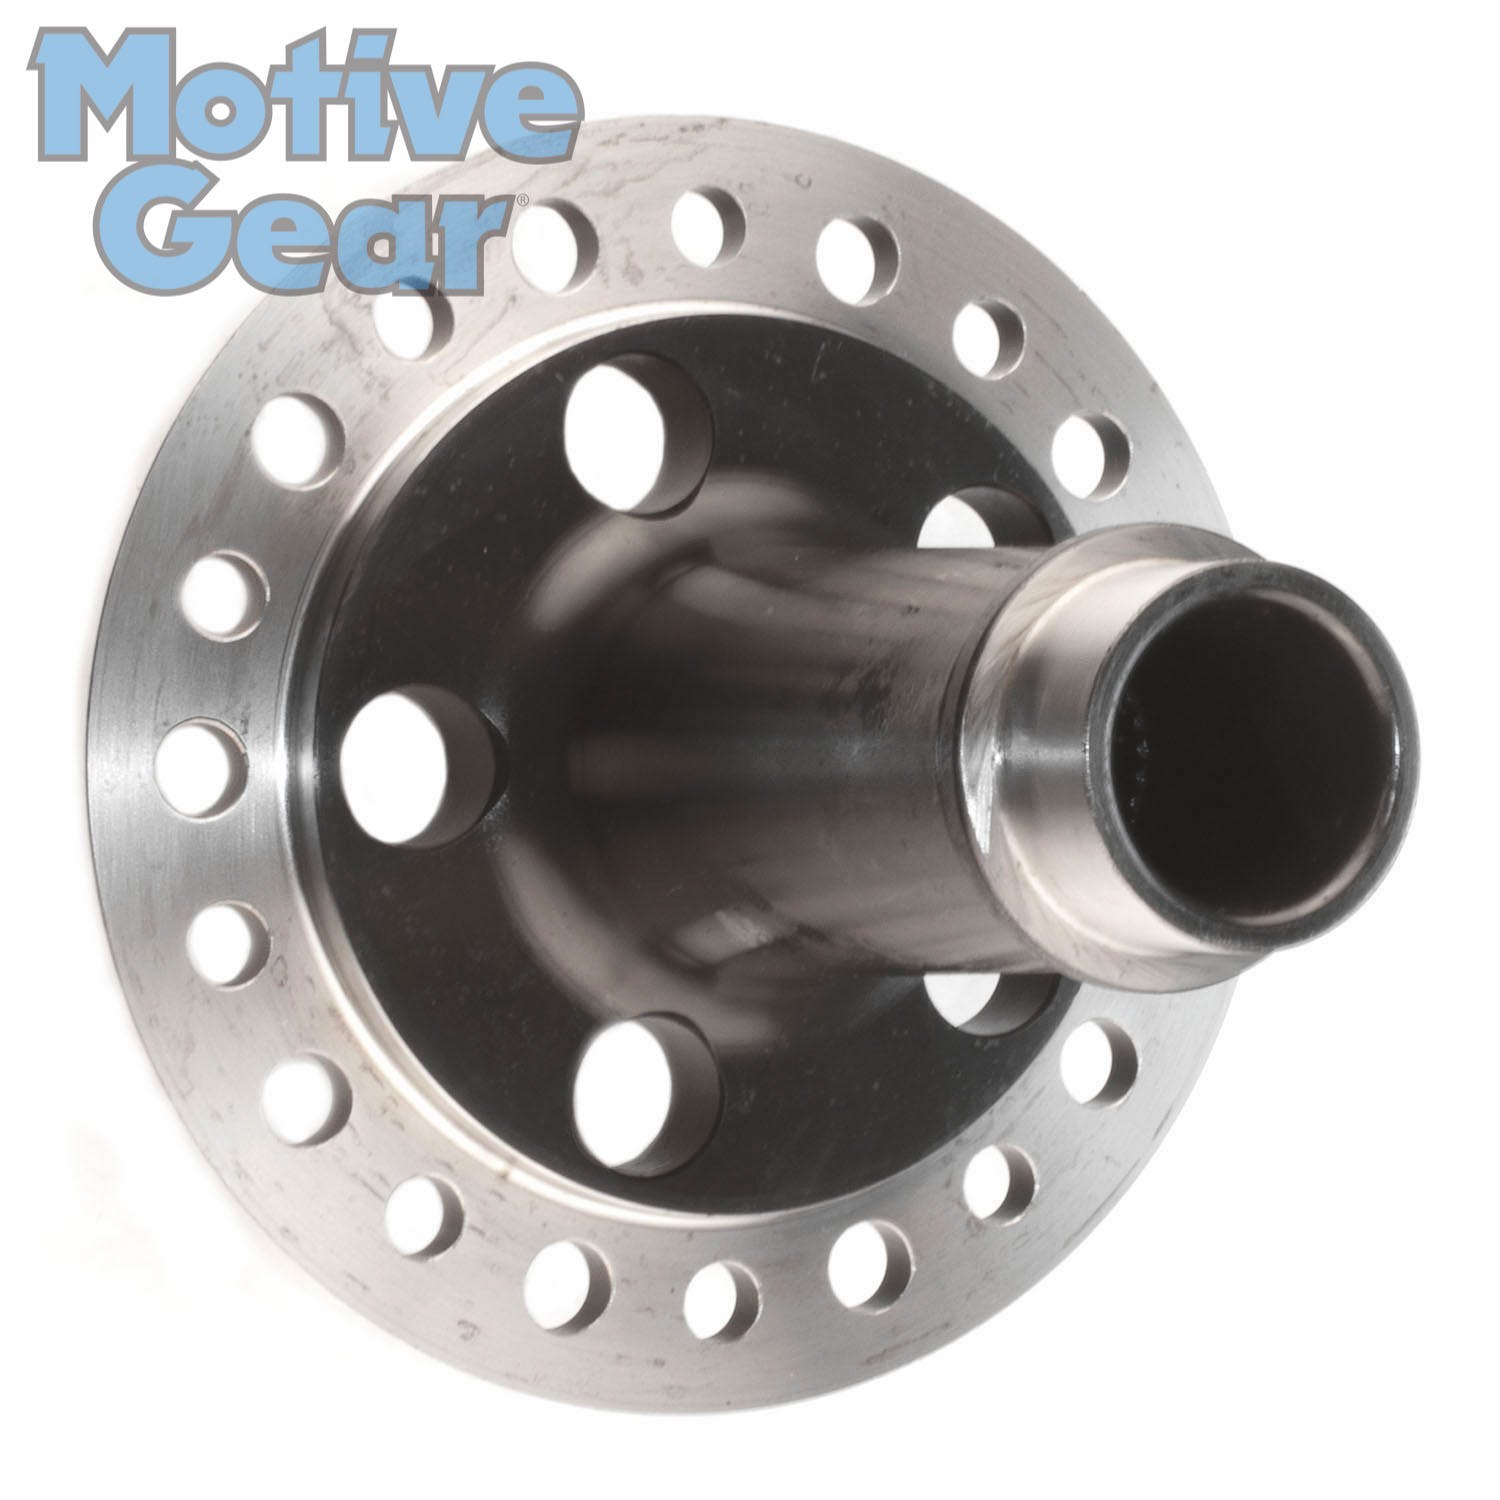 Motive Gear FS8.8-31 Differential Full Spool